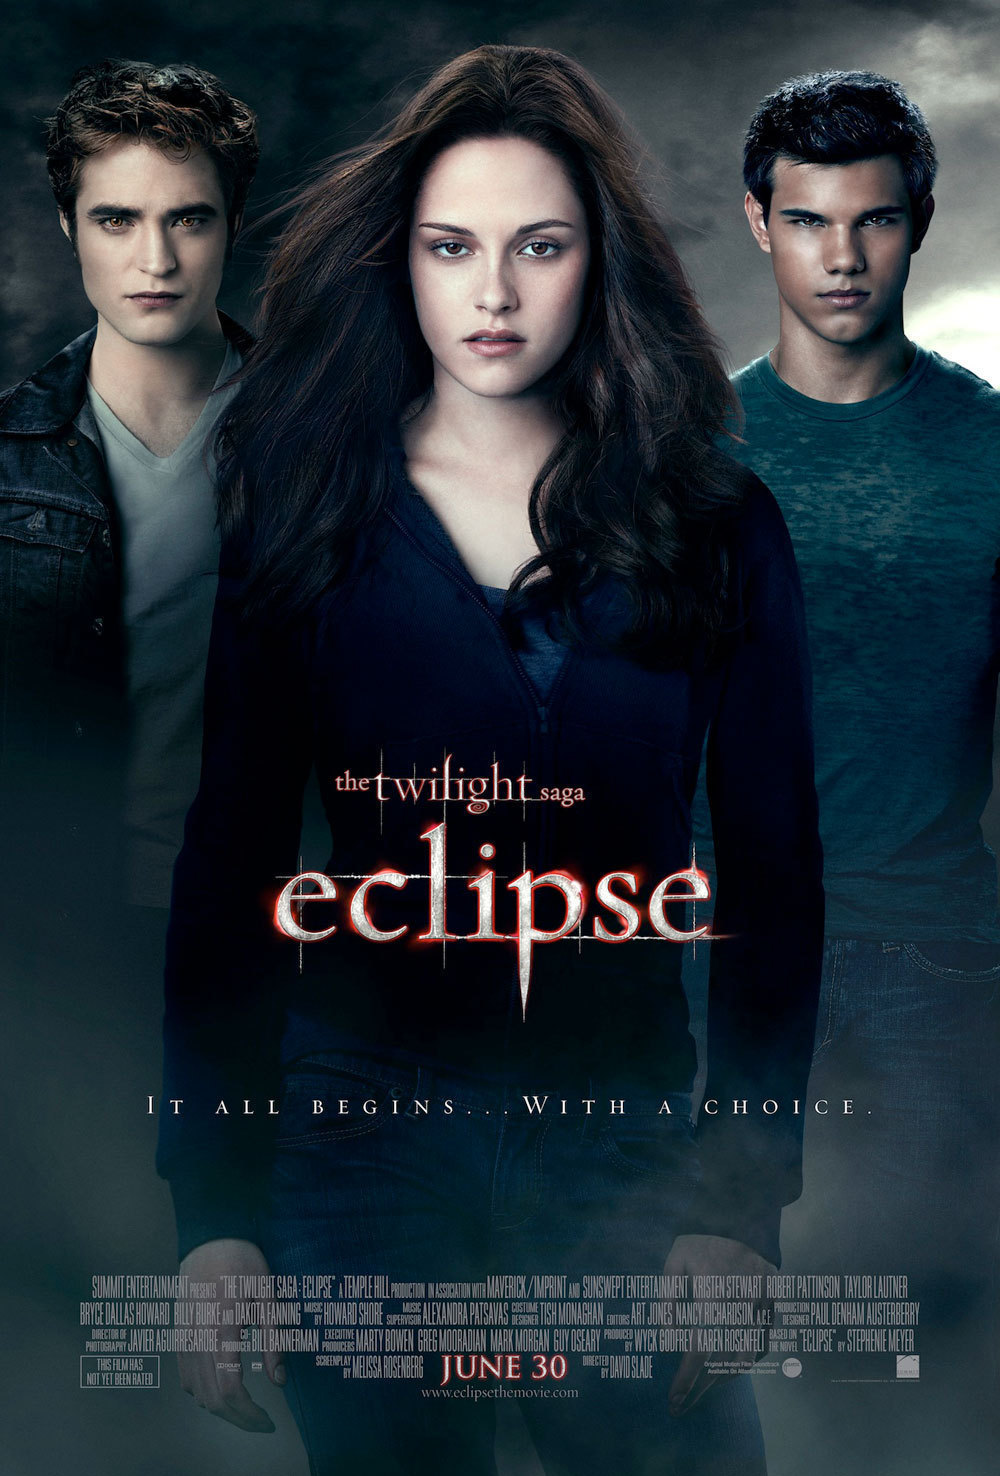 The Twilight Saga: Eclipse,